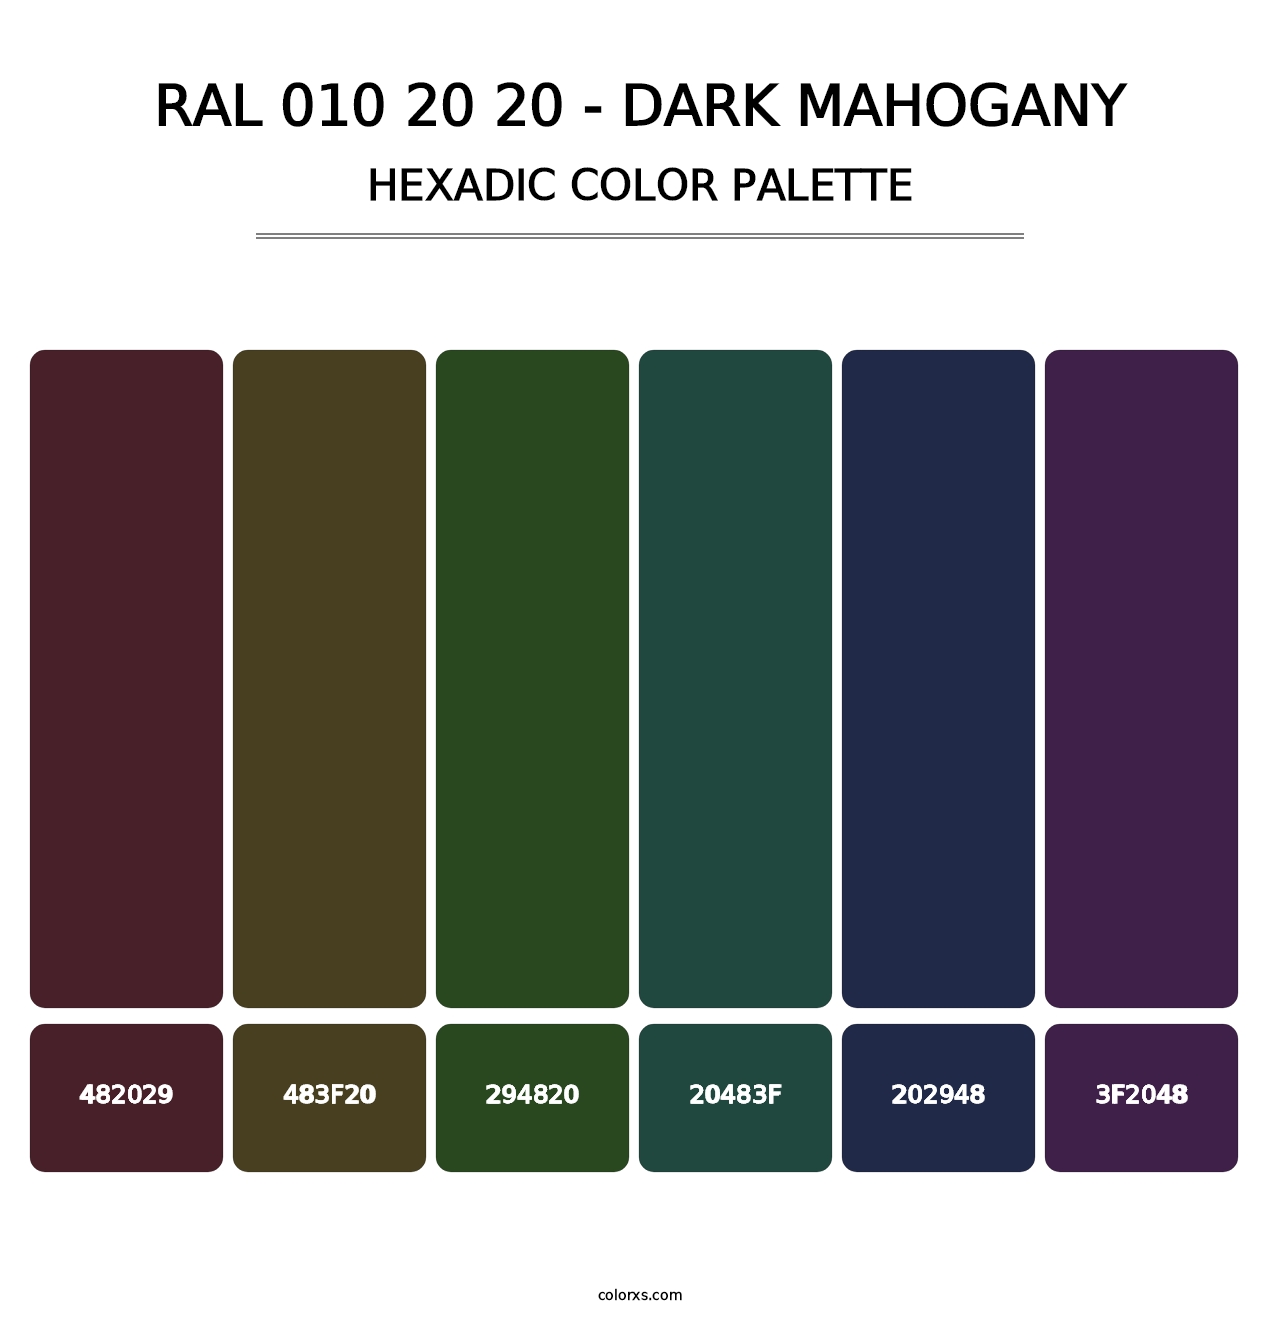 RAL 010 20 20 - Dark Mahogany - Hexadic Color Palette